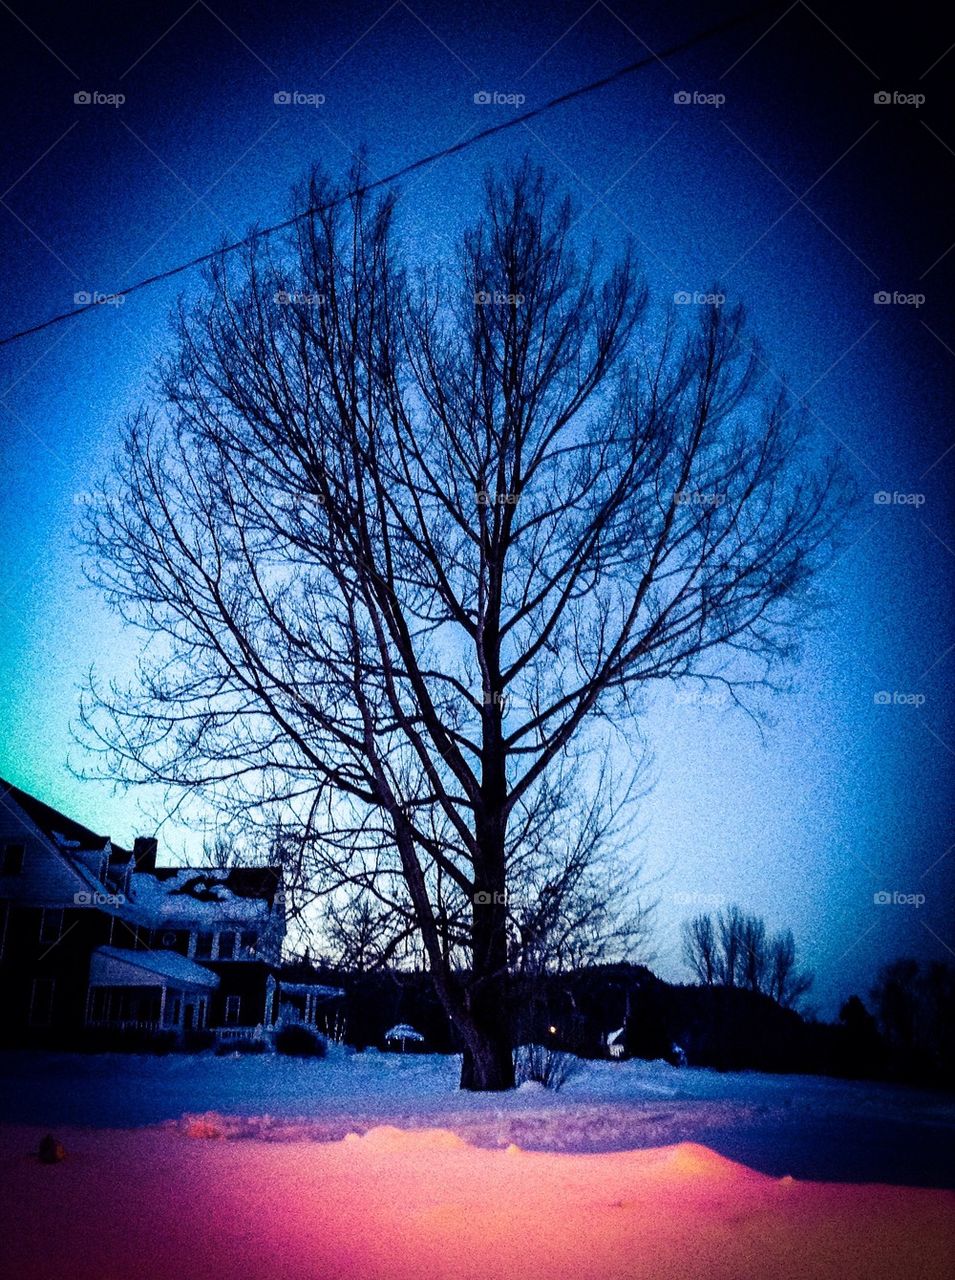 Tree in the twilight